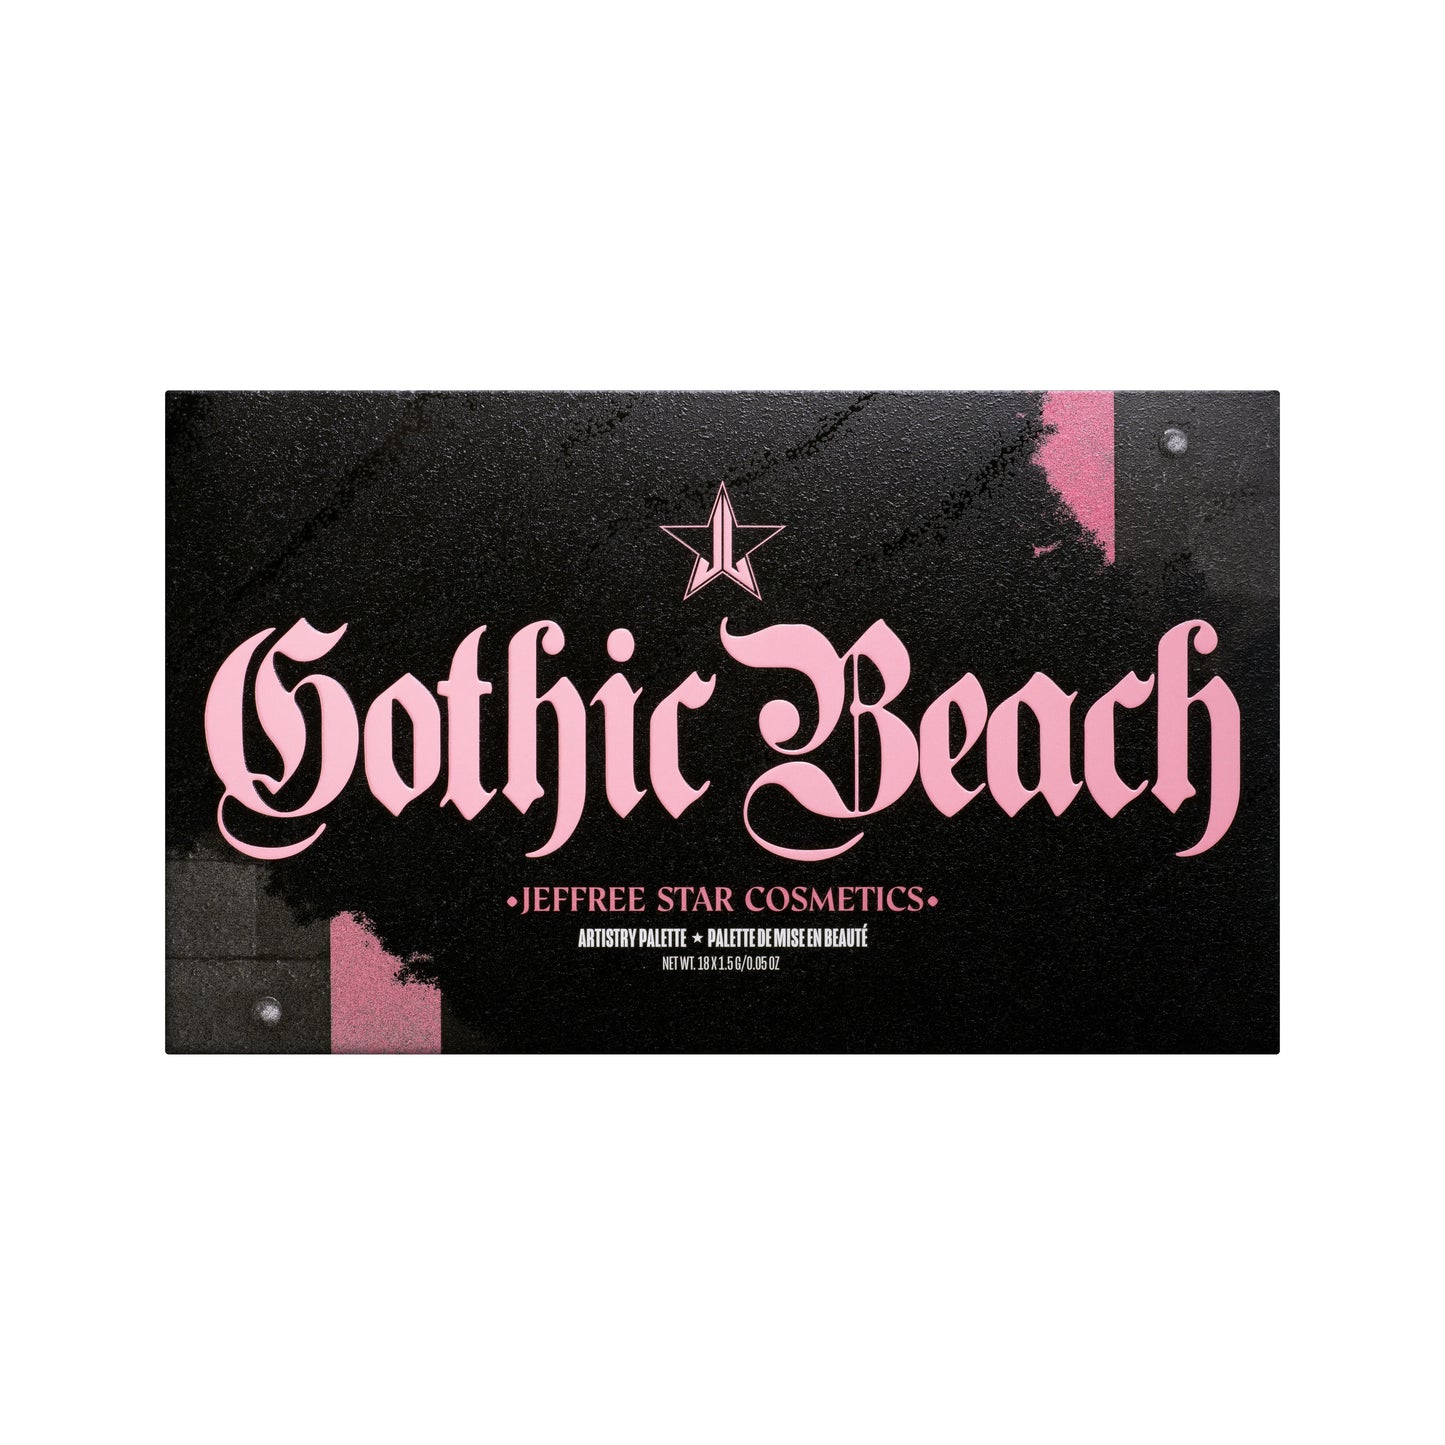 Jeffree Star Cosmetics Gothic Beach Artistry Palette